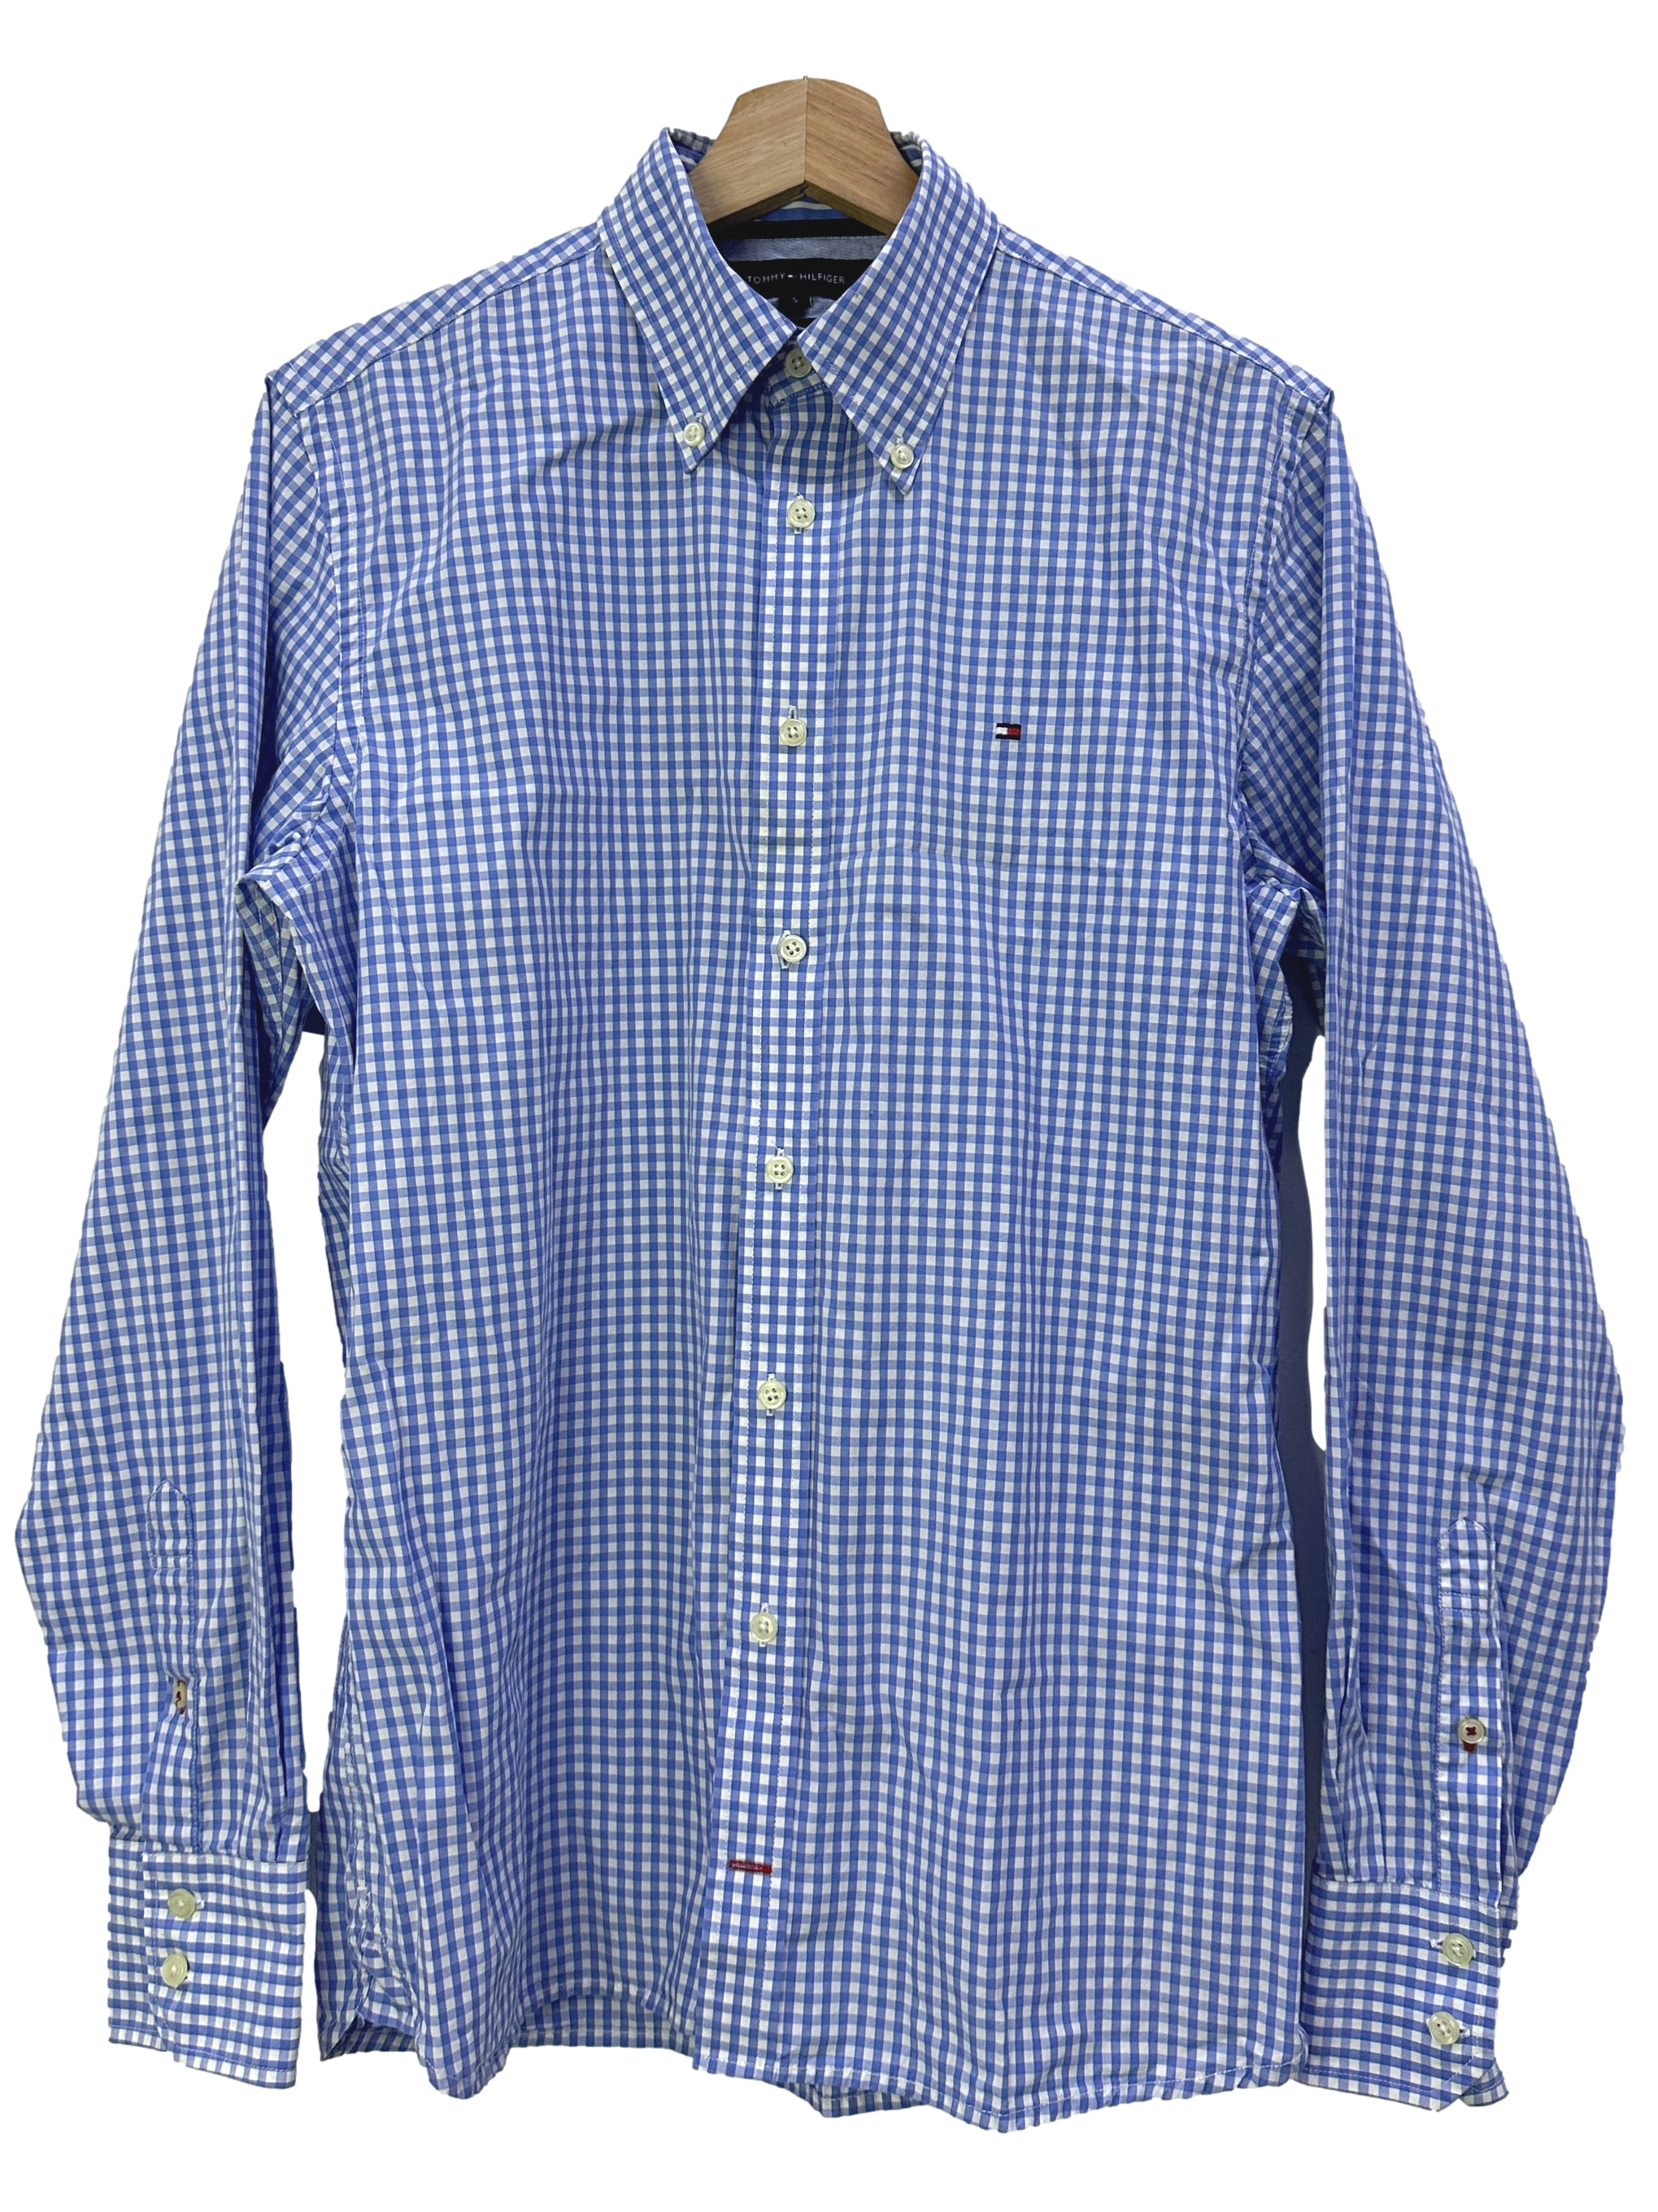 Blue & White Check Button Up Shirt